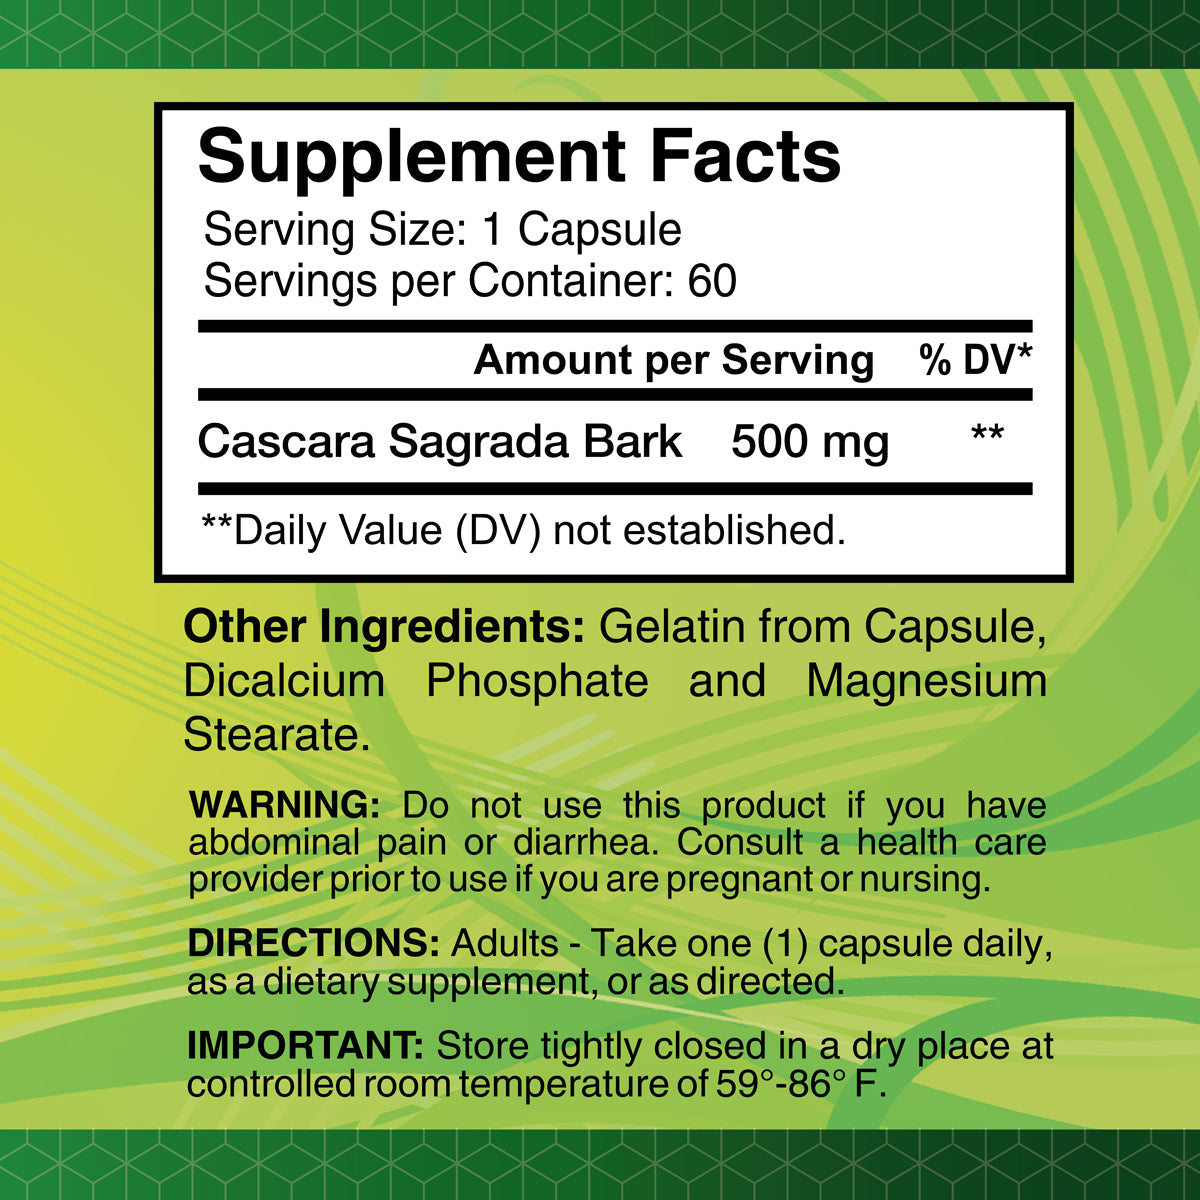 Cascara Sagrada 500 mg 60 capsules  - Master Case 48